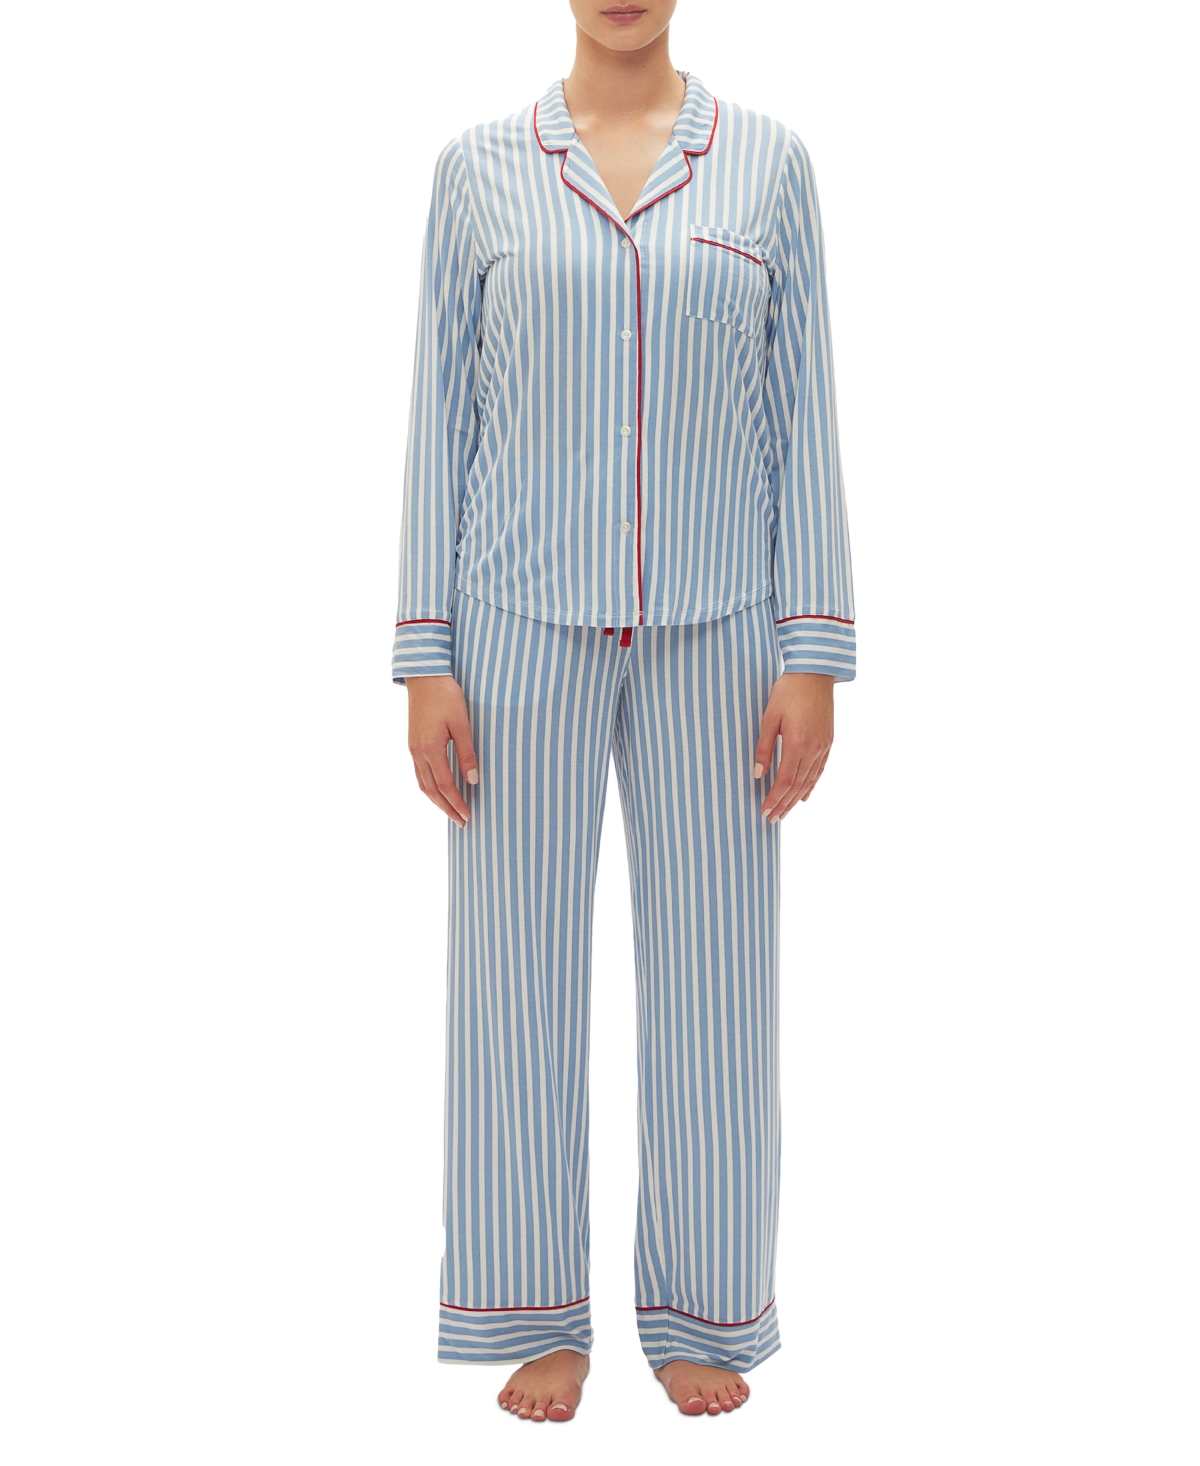 GapBody Women's 2-Pc. Notched-Collar Long-Sleeve Pajamas Set - Blue And White Stripe